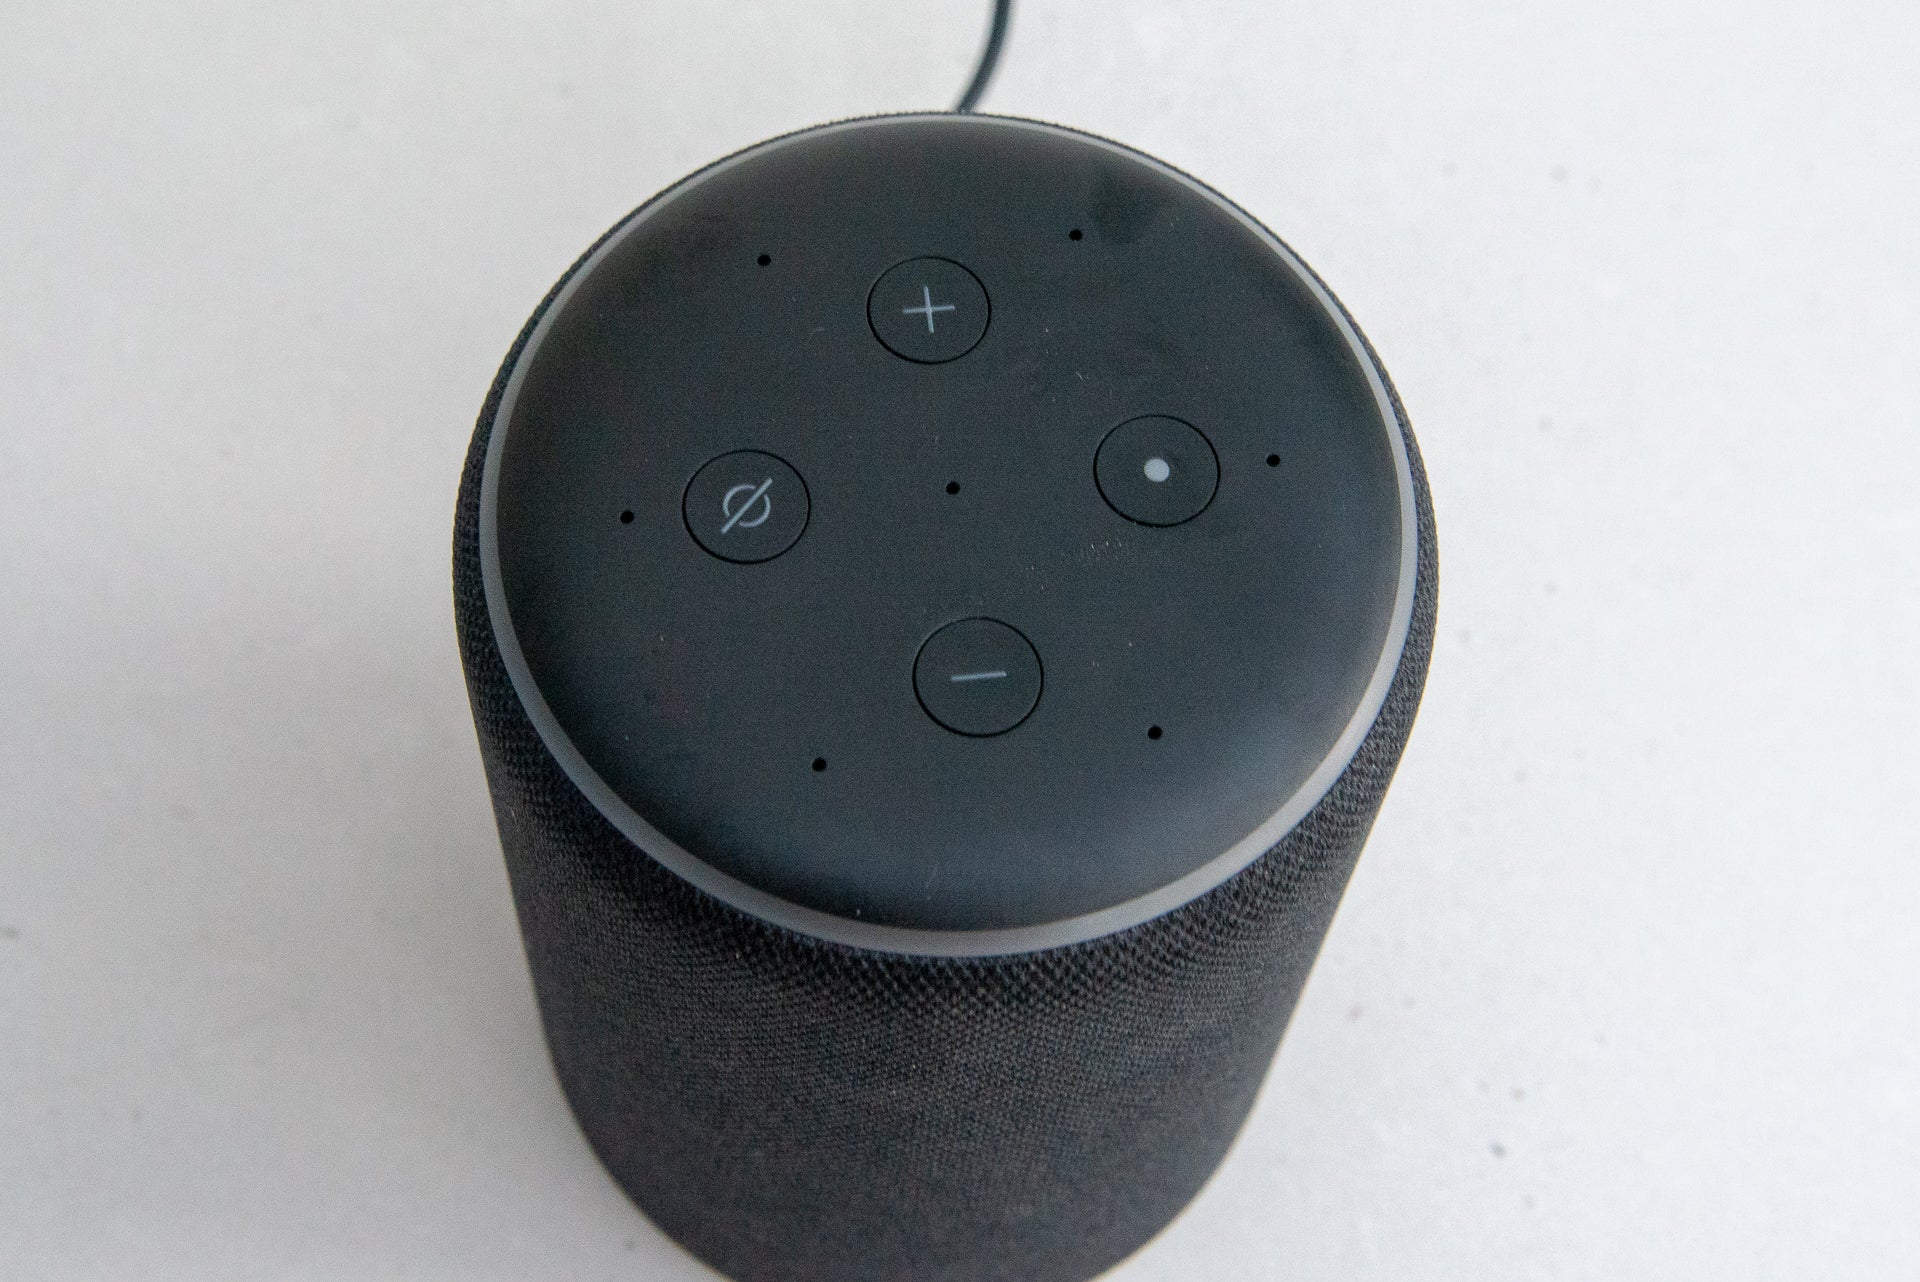 Amazon Echo Plus (2nd Gen) controls